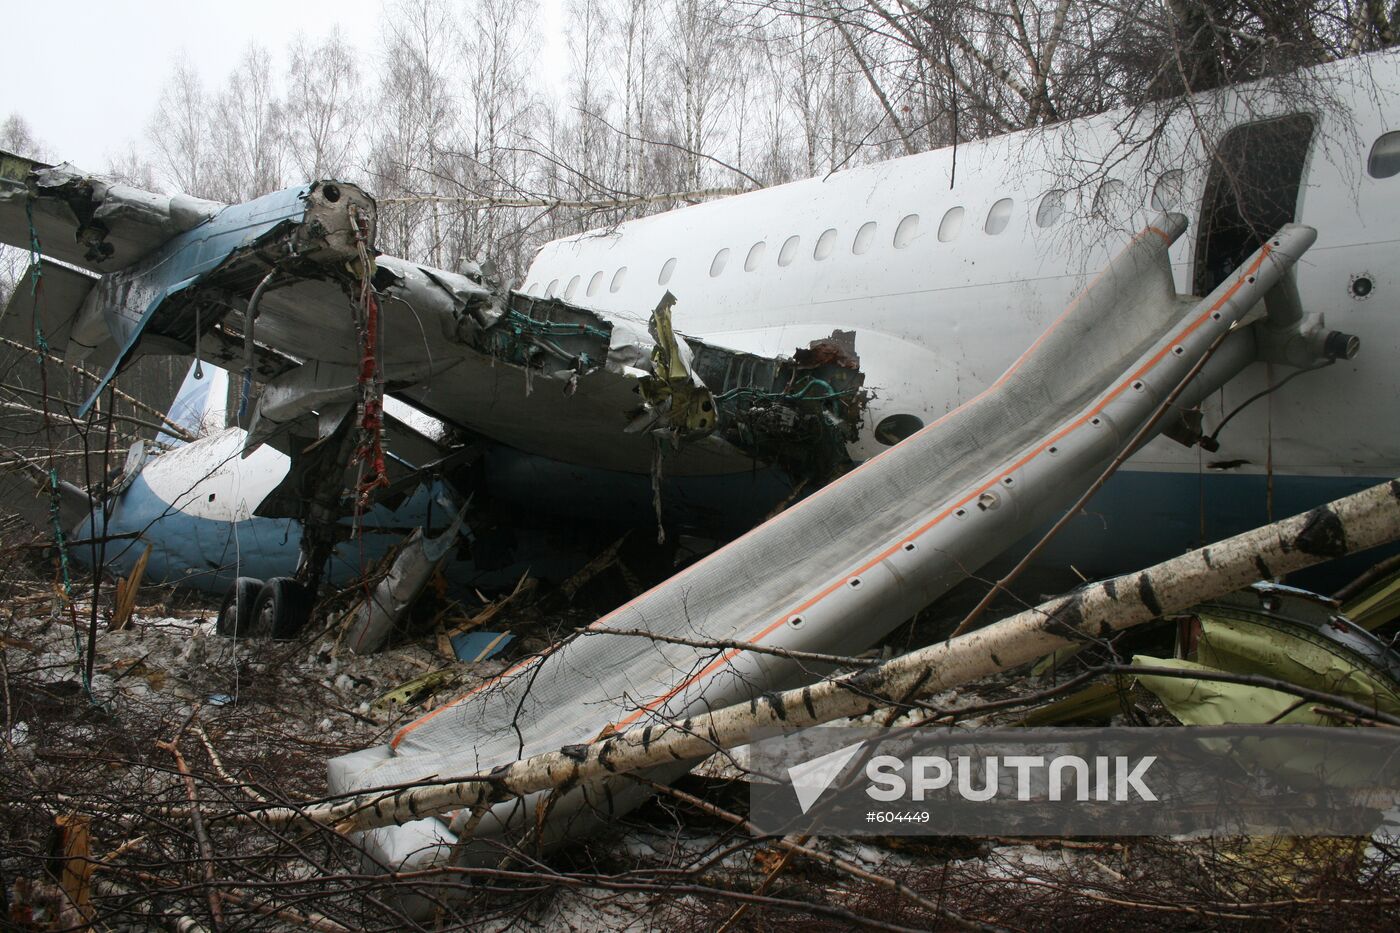 Aviastar-TU aircraft makes emergency landing